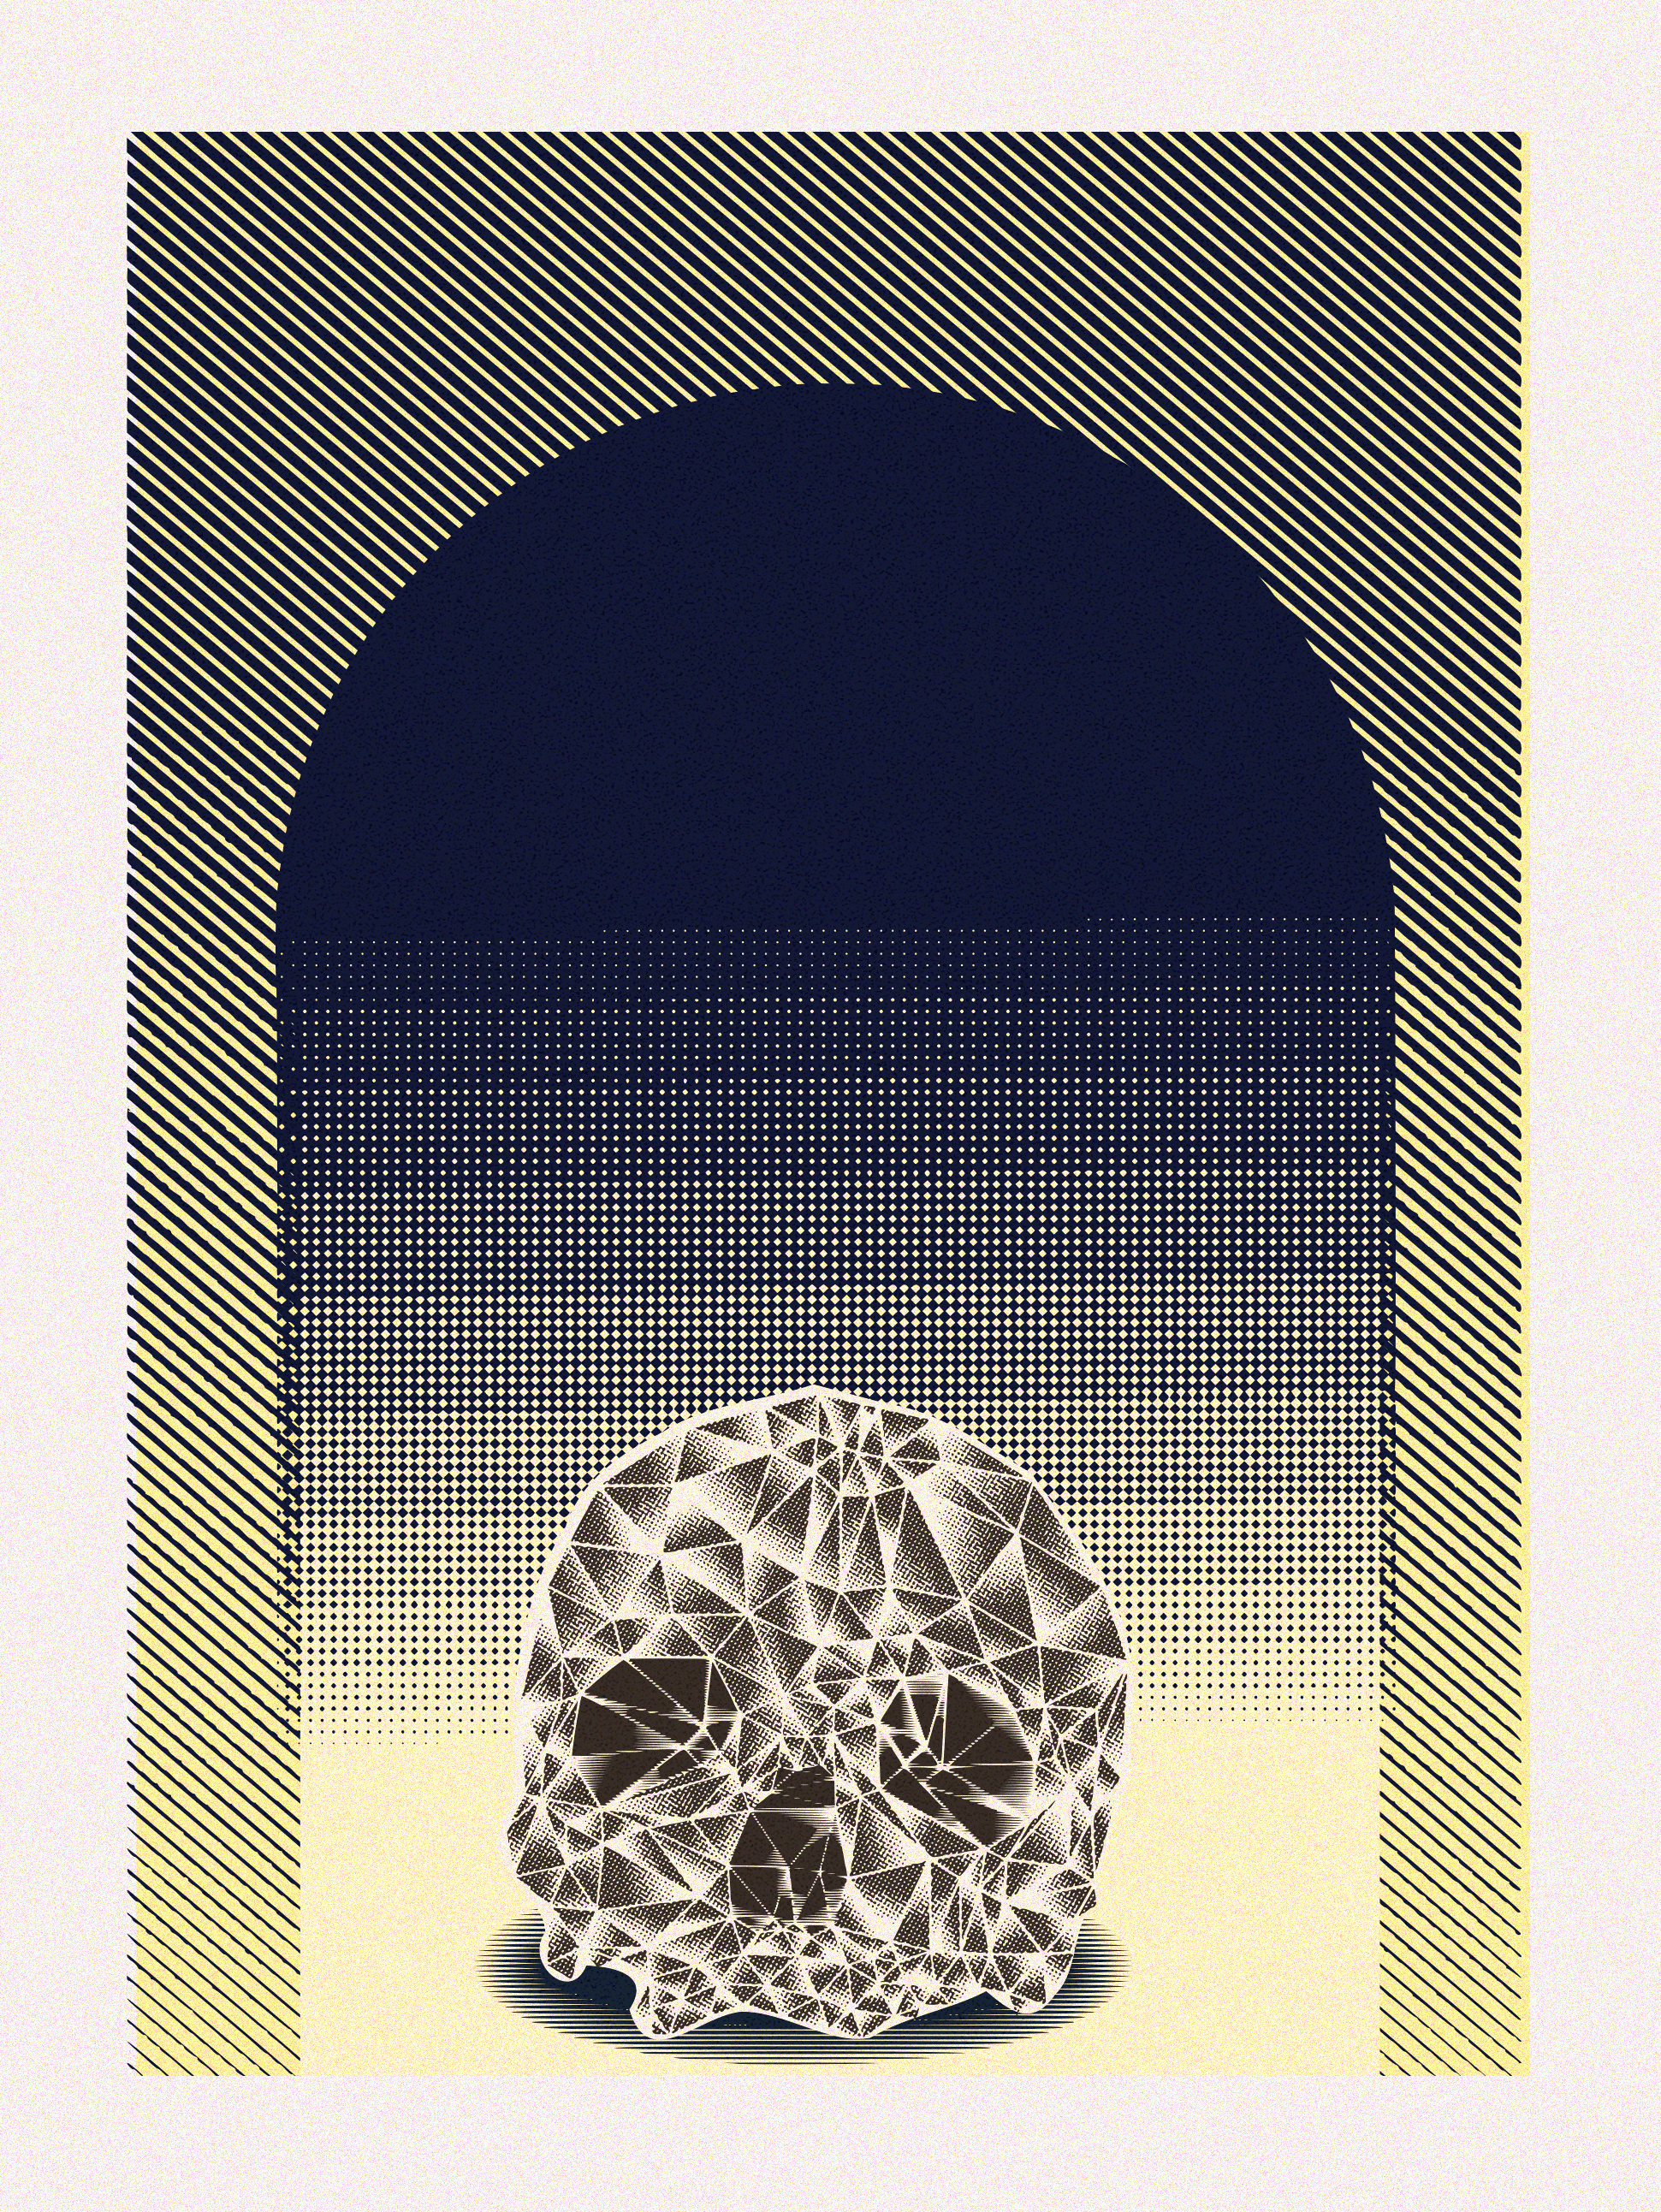 Untitled - Skull in a niche